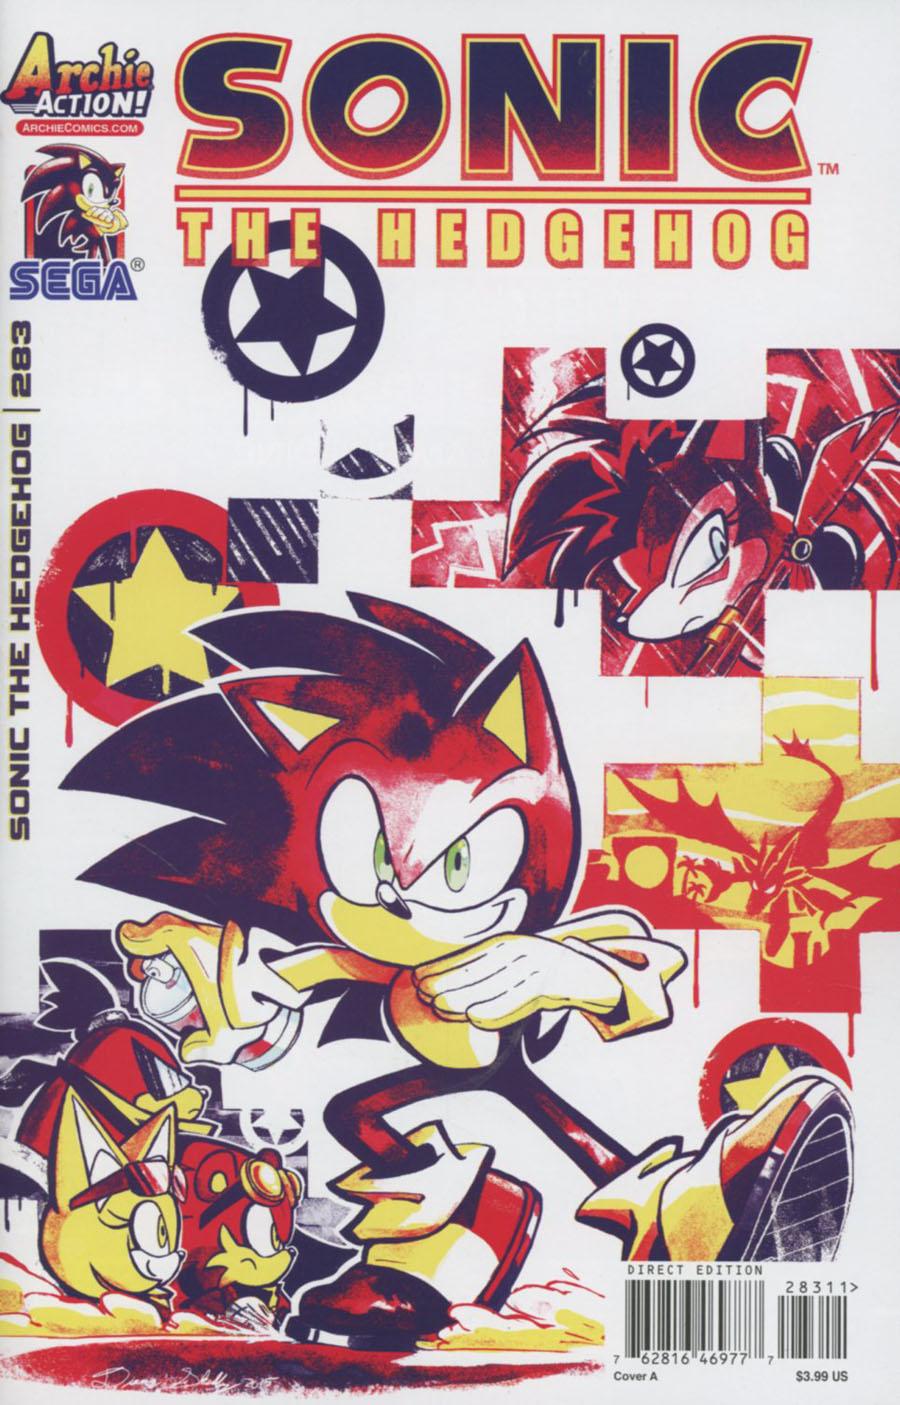 Sonic the Hedgehog Vol. 2 #283